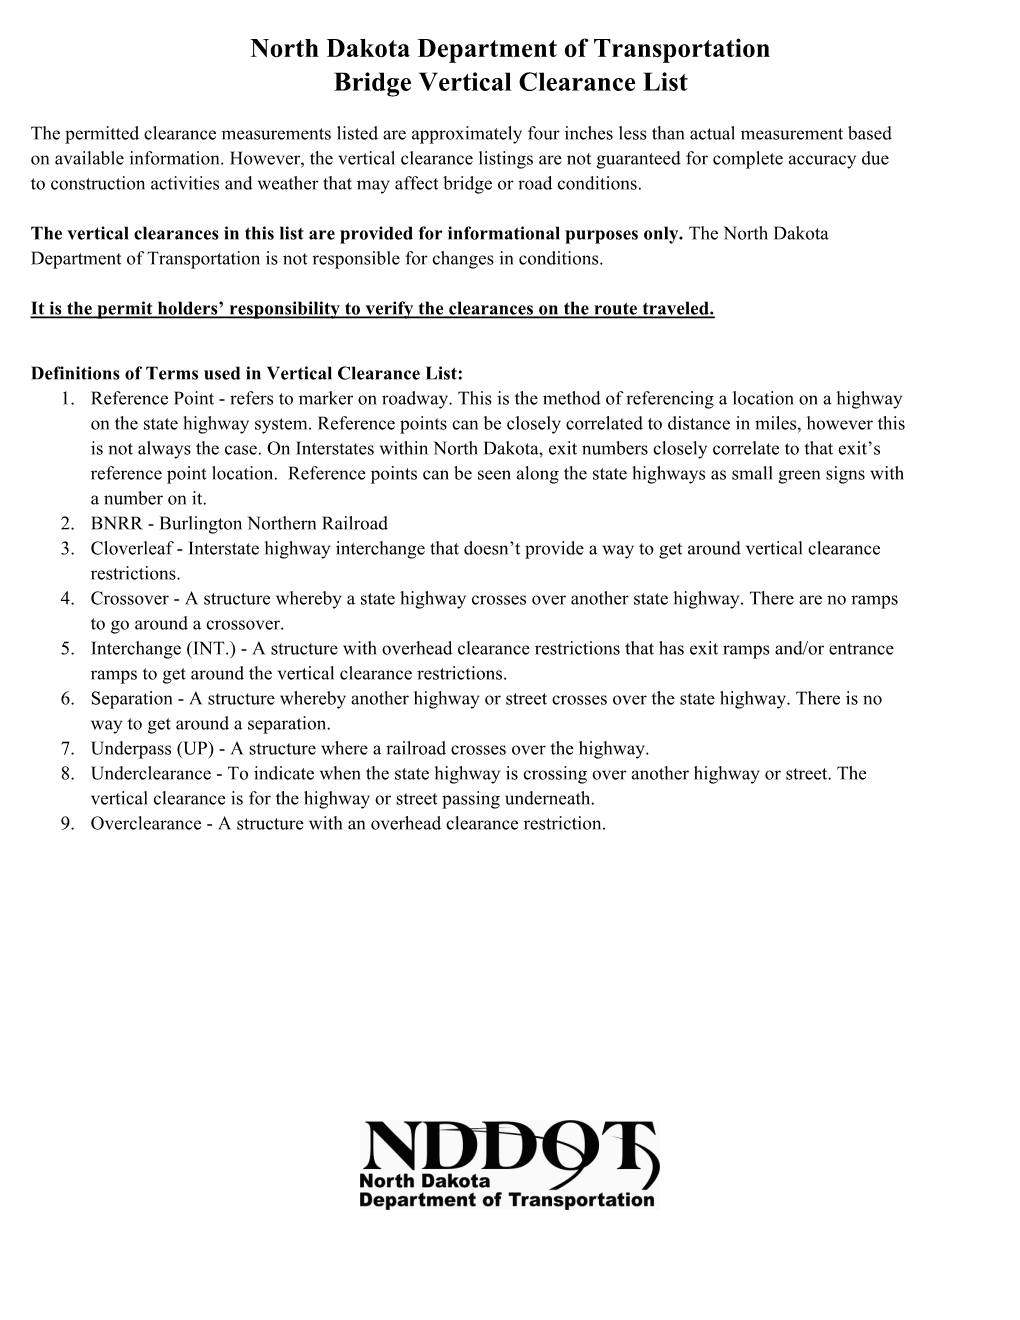 North Dakota Department of Transportation Bridge Vertical Clearance List